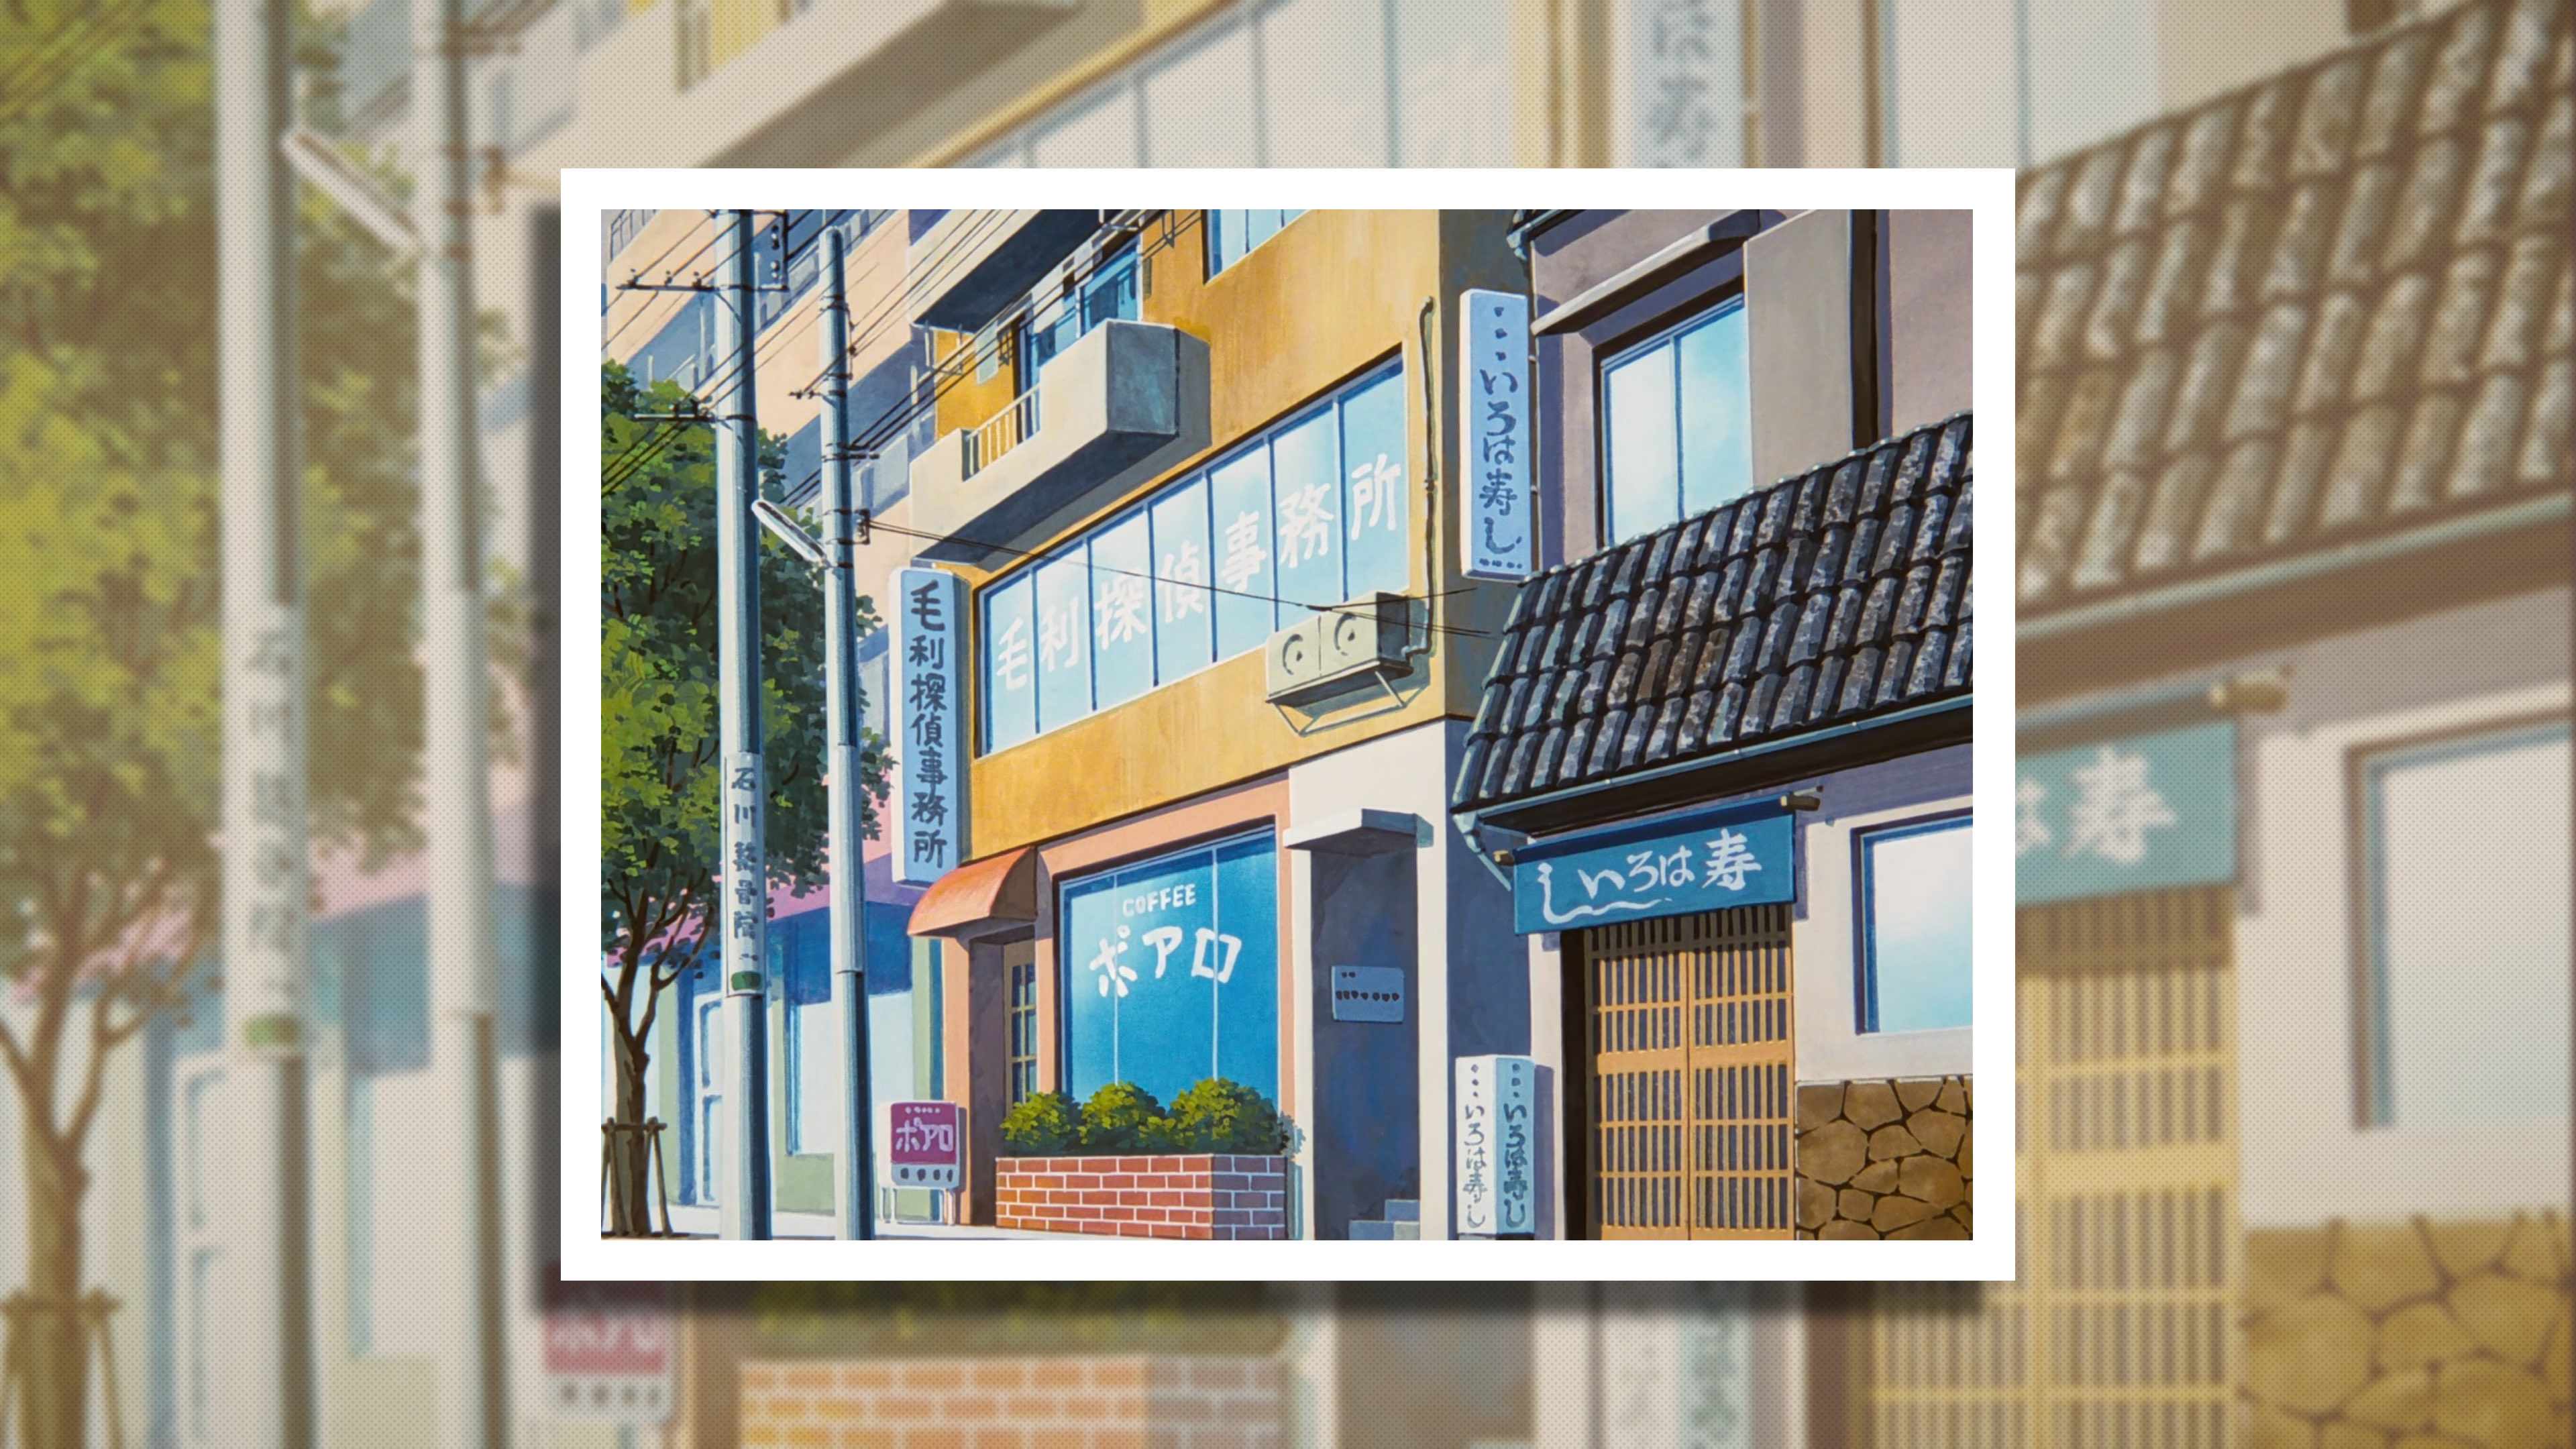 Anime 3840x2160 office Detective Conan minimalism window frames door trees street anime Anime screenshot air conditioning balcony lamp post